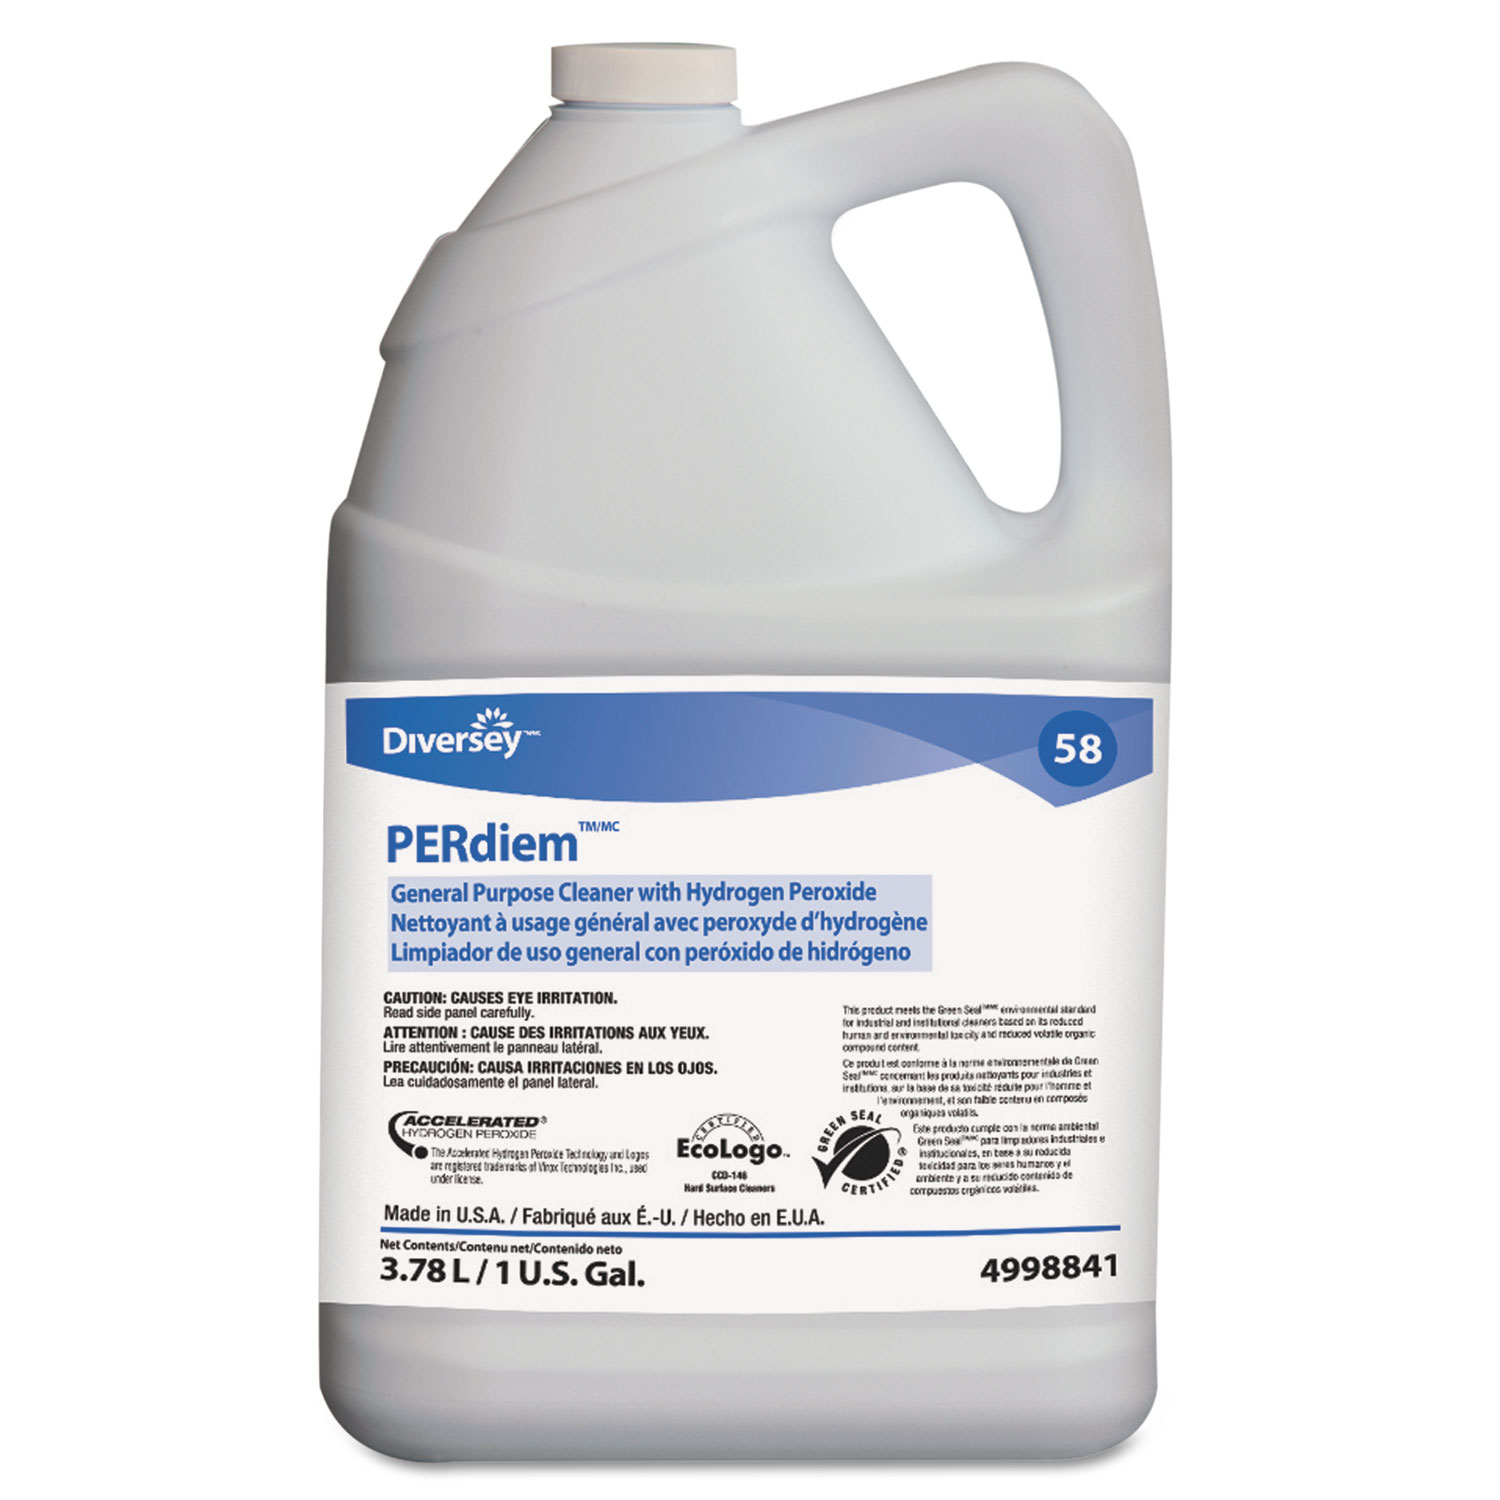  Diversey 94998841 PERdiem Concentrated General Purpose Cleaner - Hydrogen Peroxide, 1gal, Bottle (DVO94998841) 